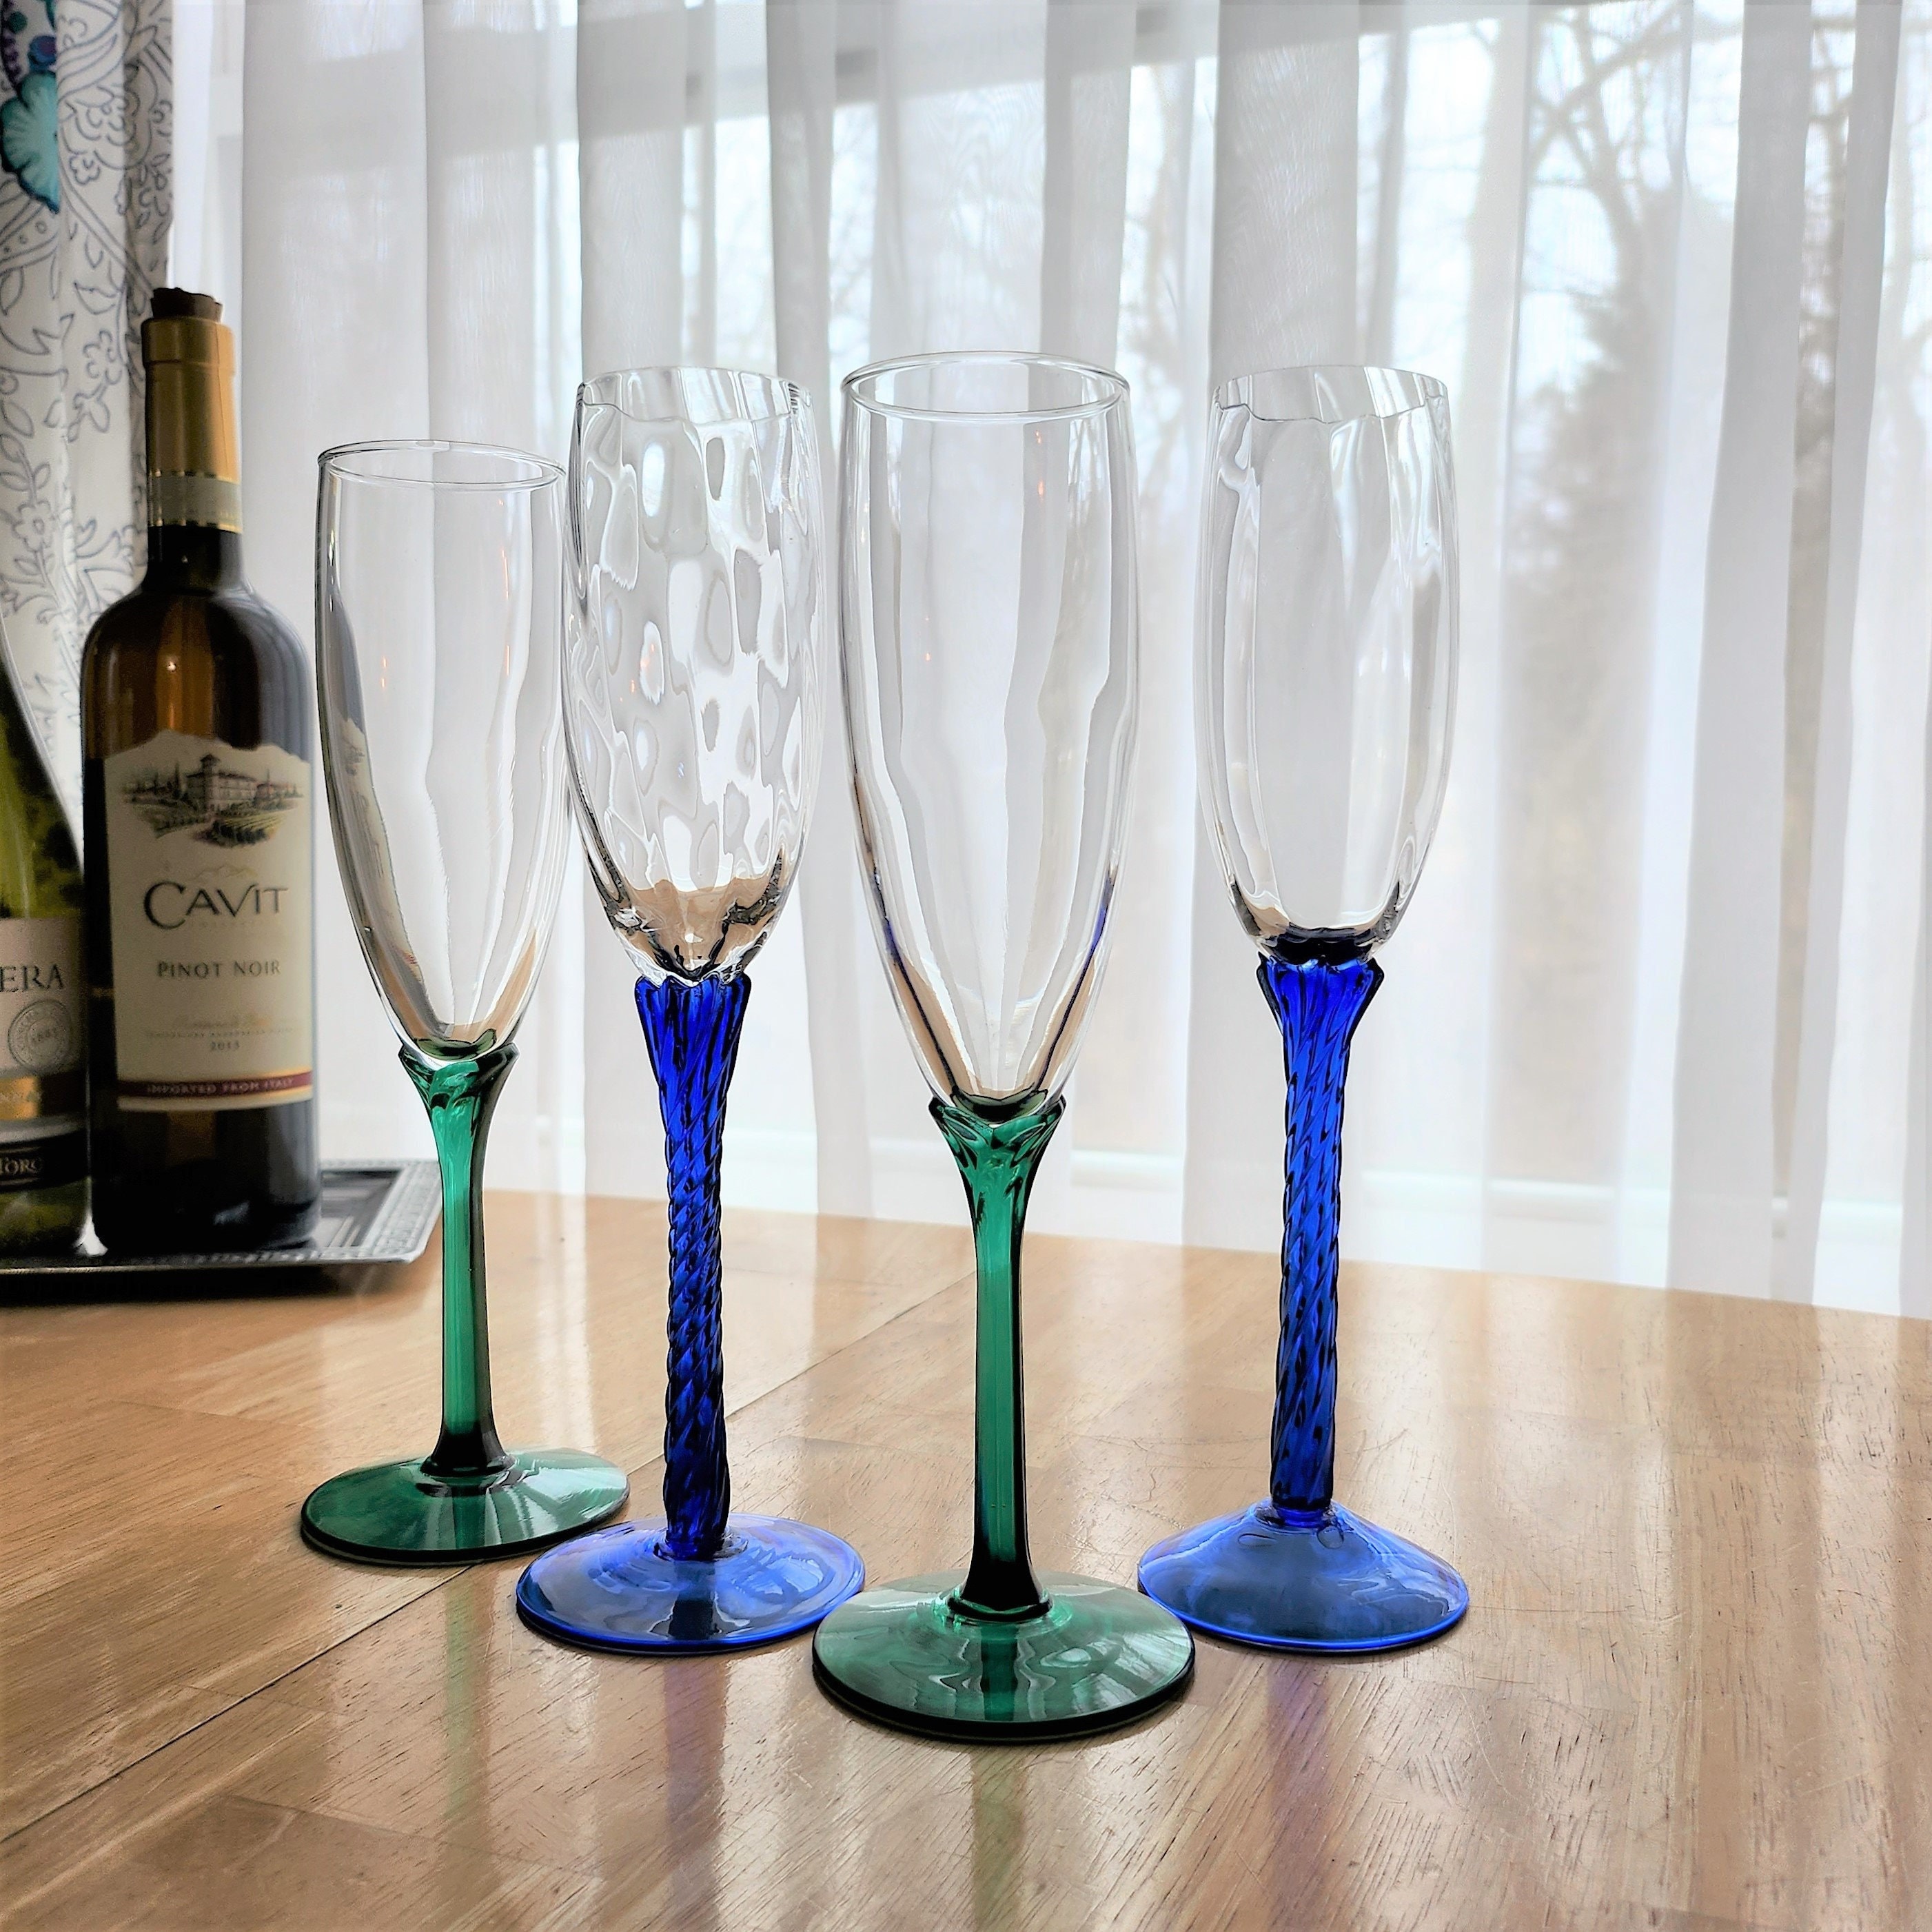 Trix Wine Glasses, Set of 2, Platinum and Gold